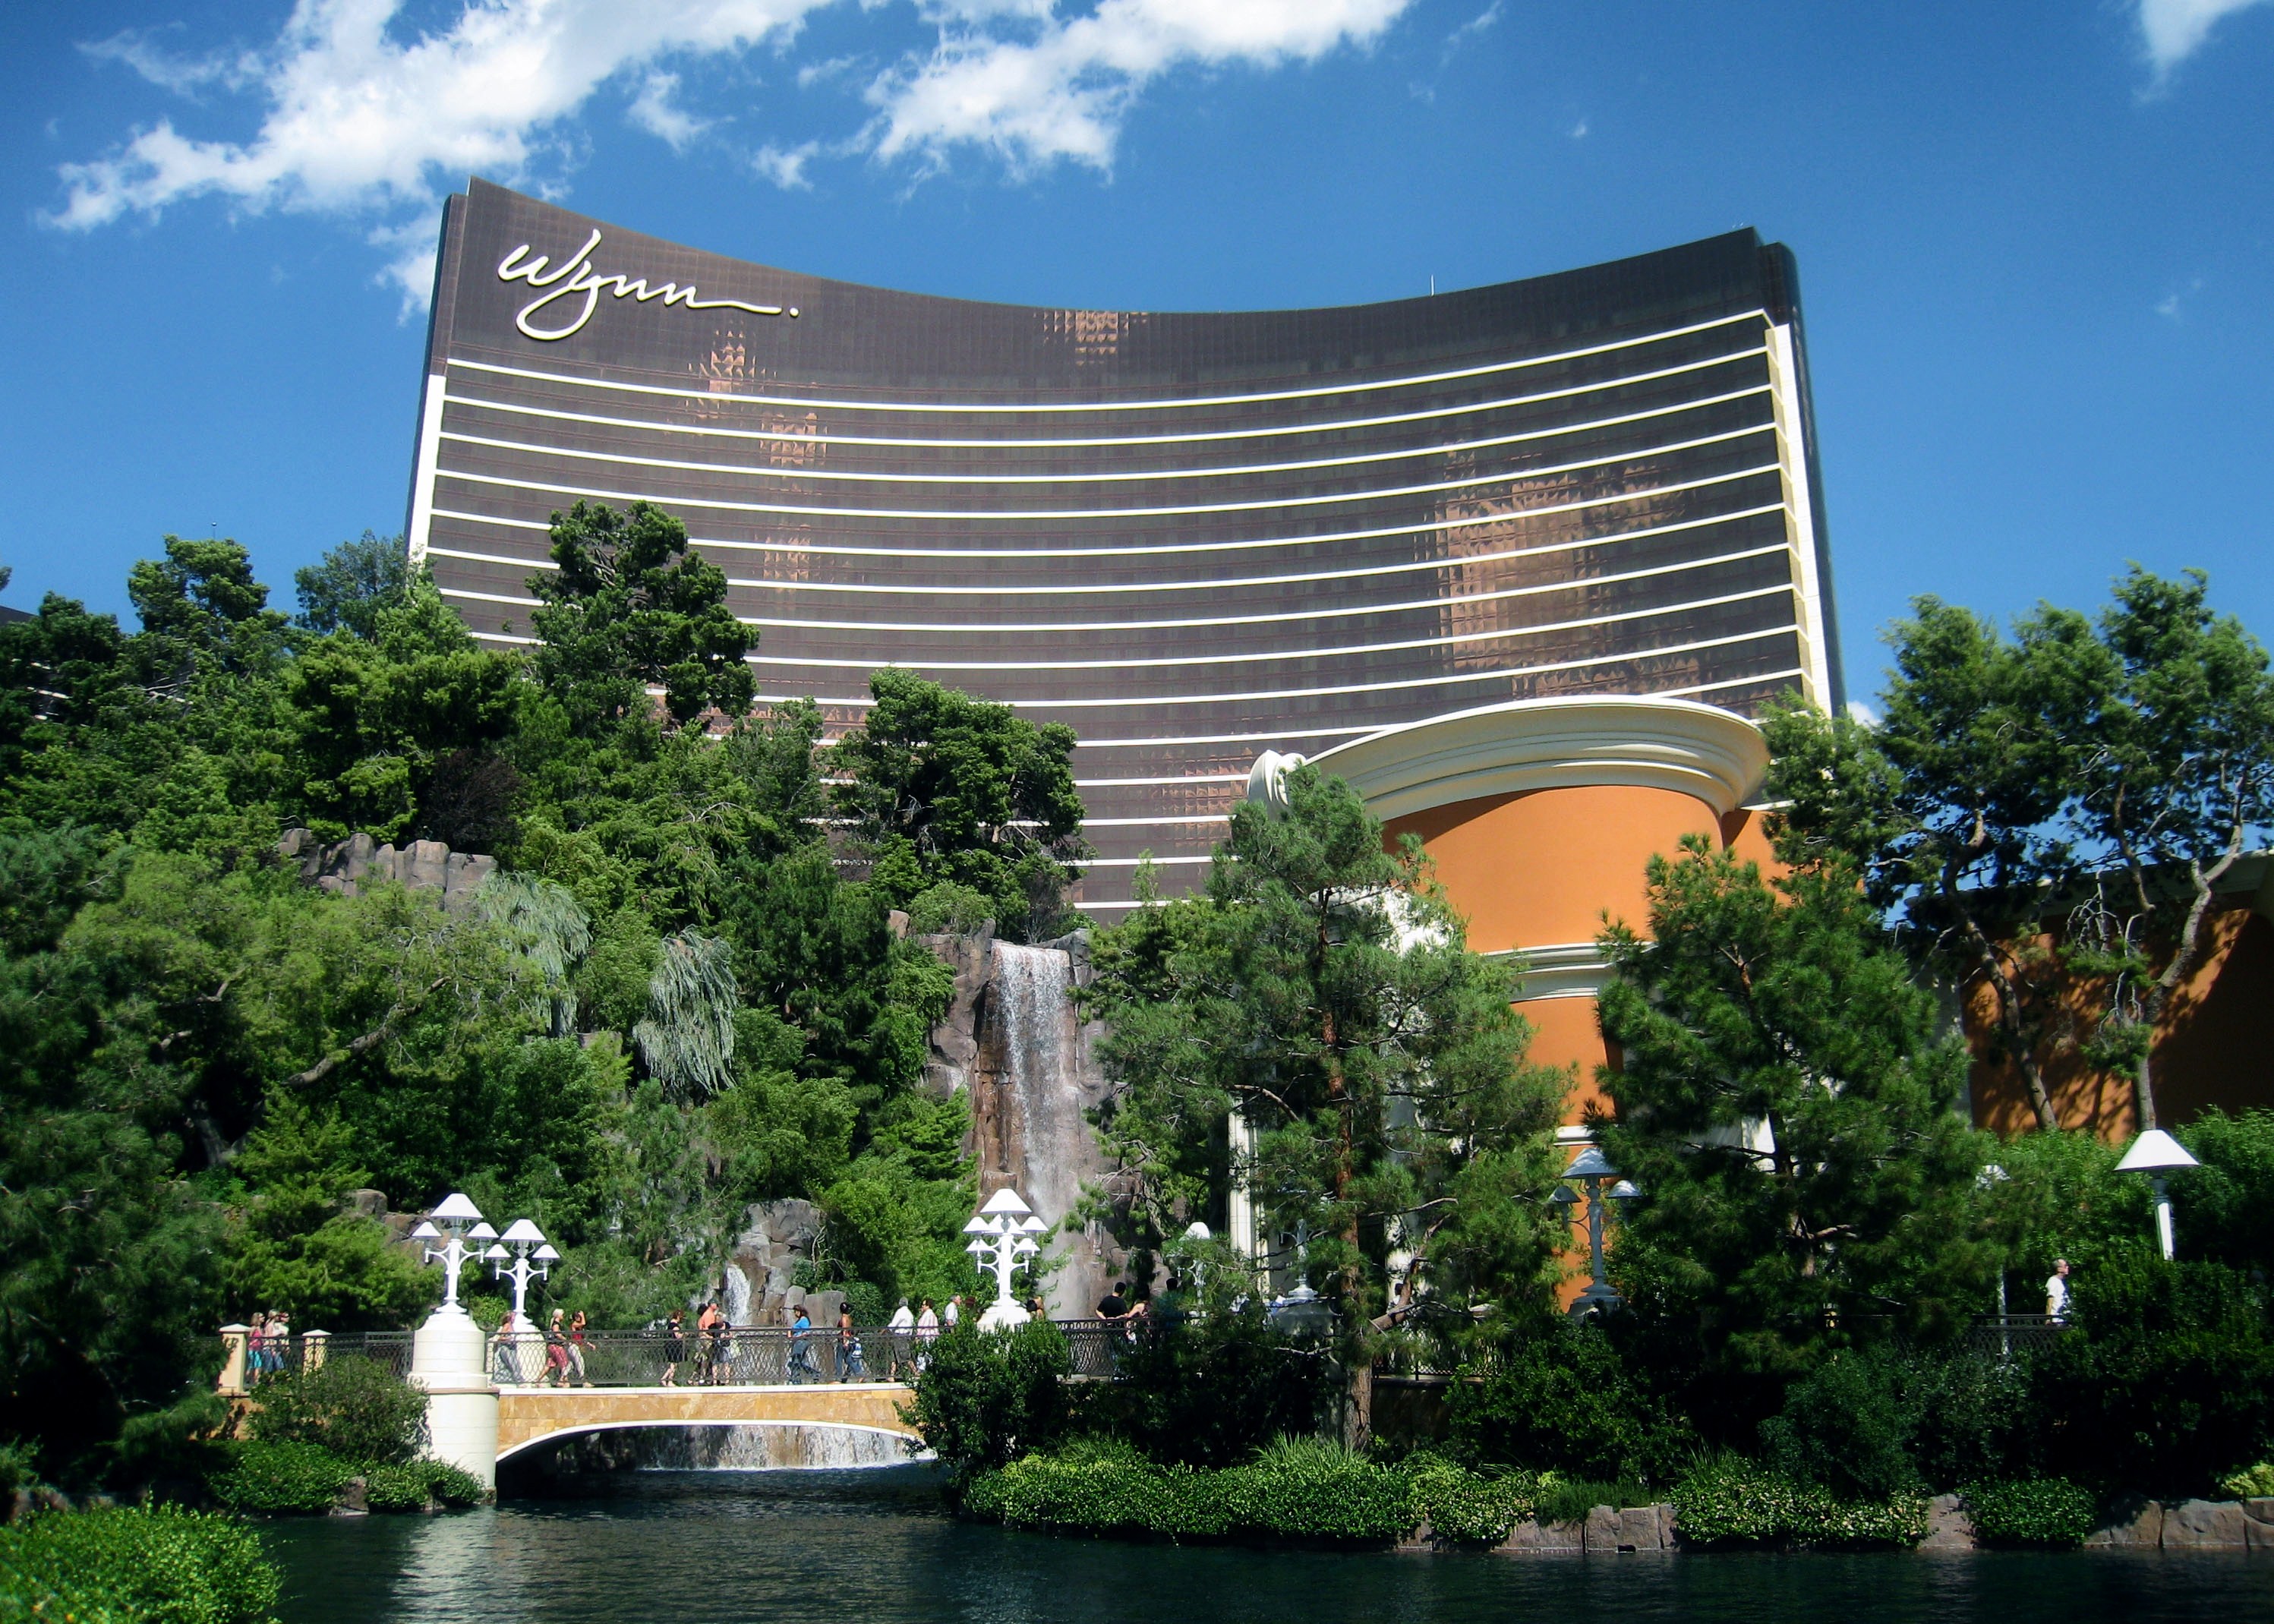 On This Date, April 28, 2005, the Wynn Opened in Las Vegas Las Vegas 360